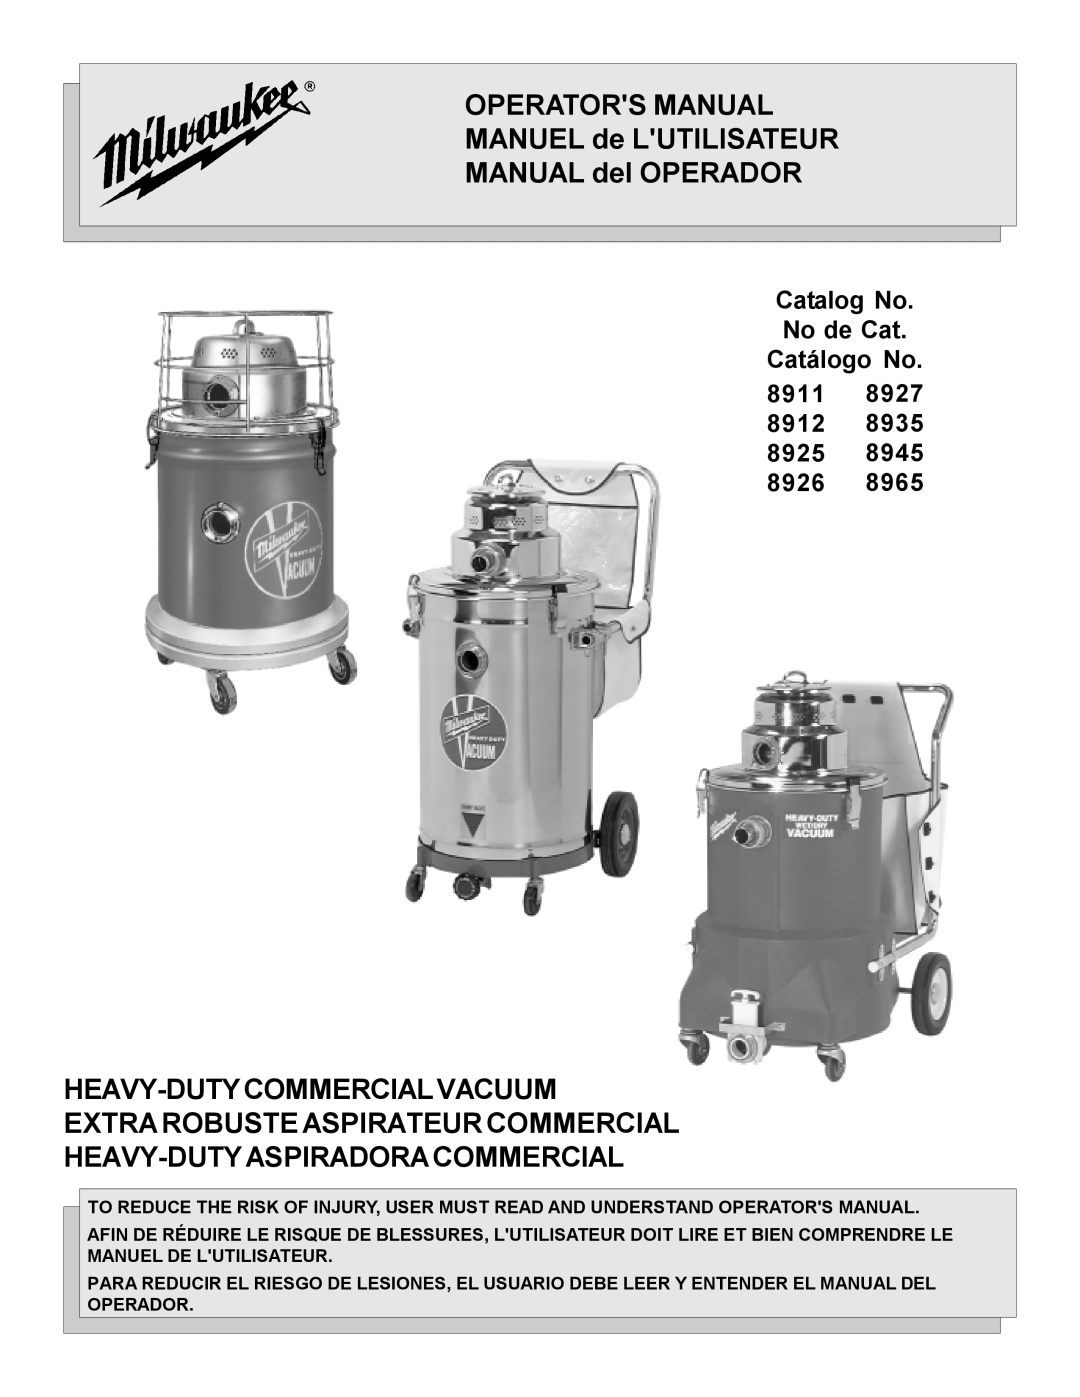 Milwaukee Heavy-Duty Commercial Vacuum manual Catalog No. No de Cat Catálogo No, 8926, MANUAL del OPERADOR 